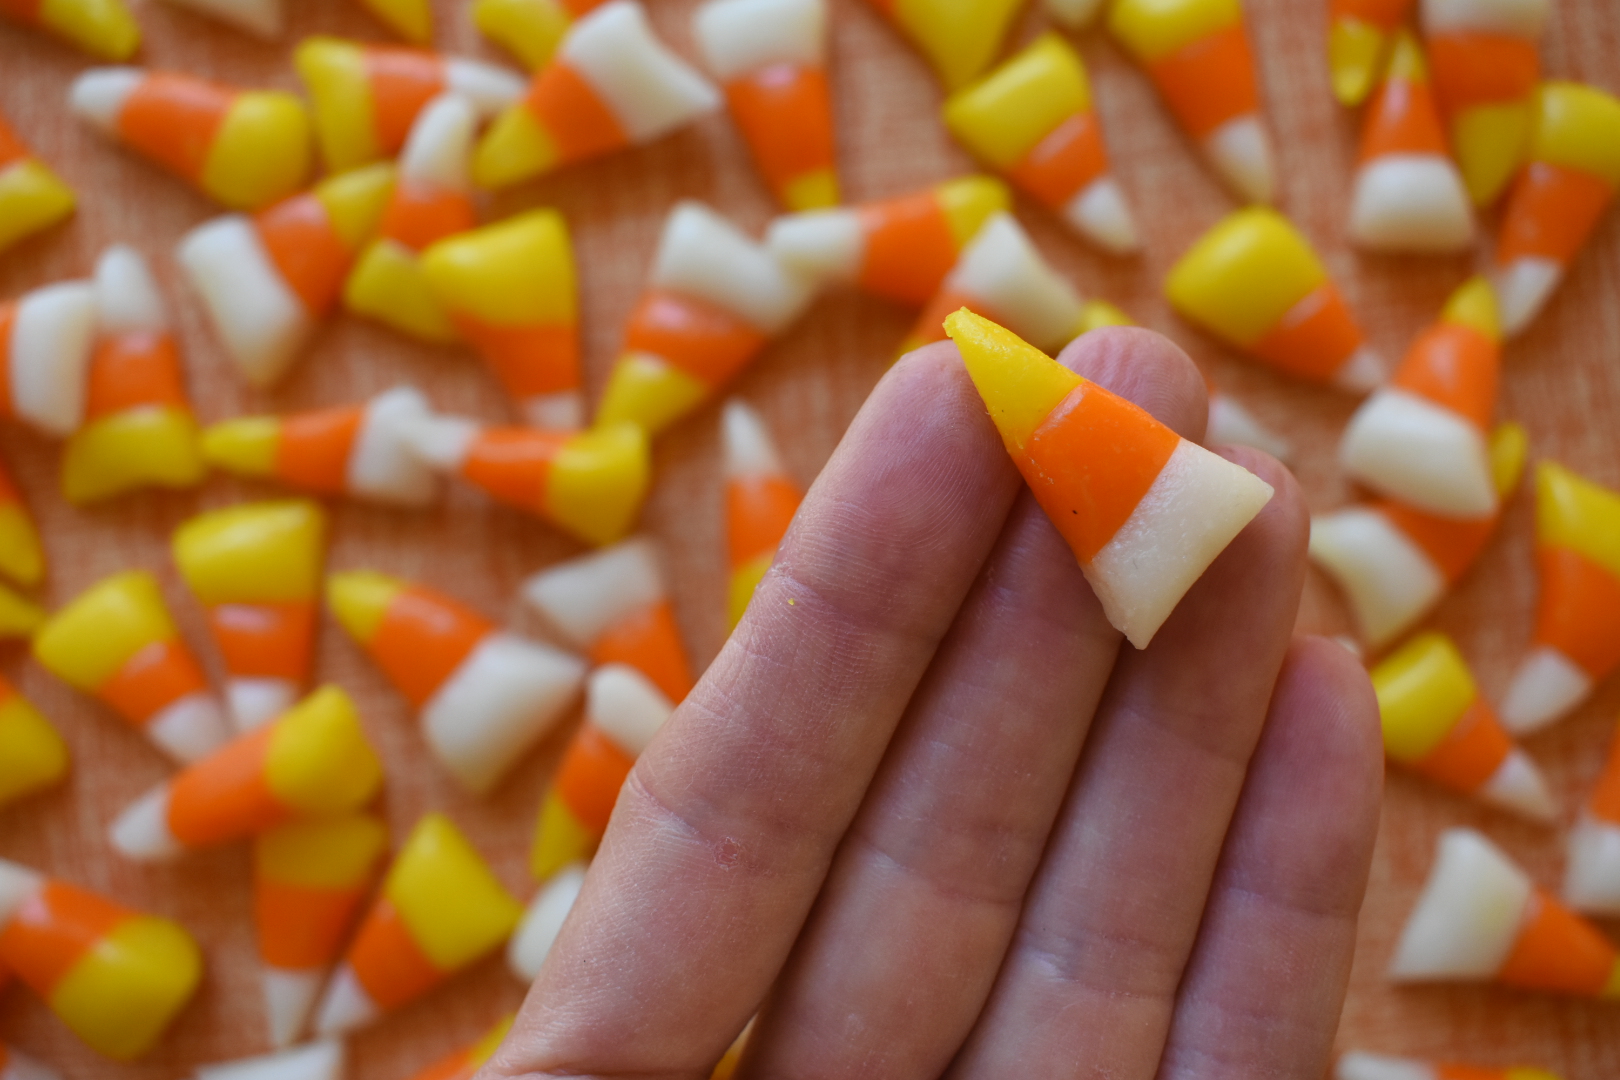 homemade-candy-corn-for-national-candy-corn-day-baste-cut-fold